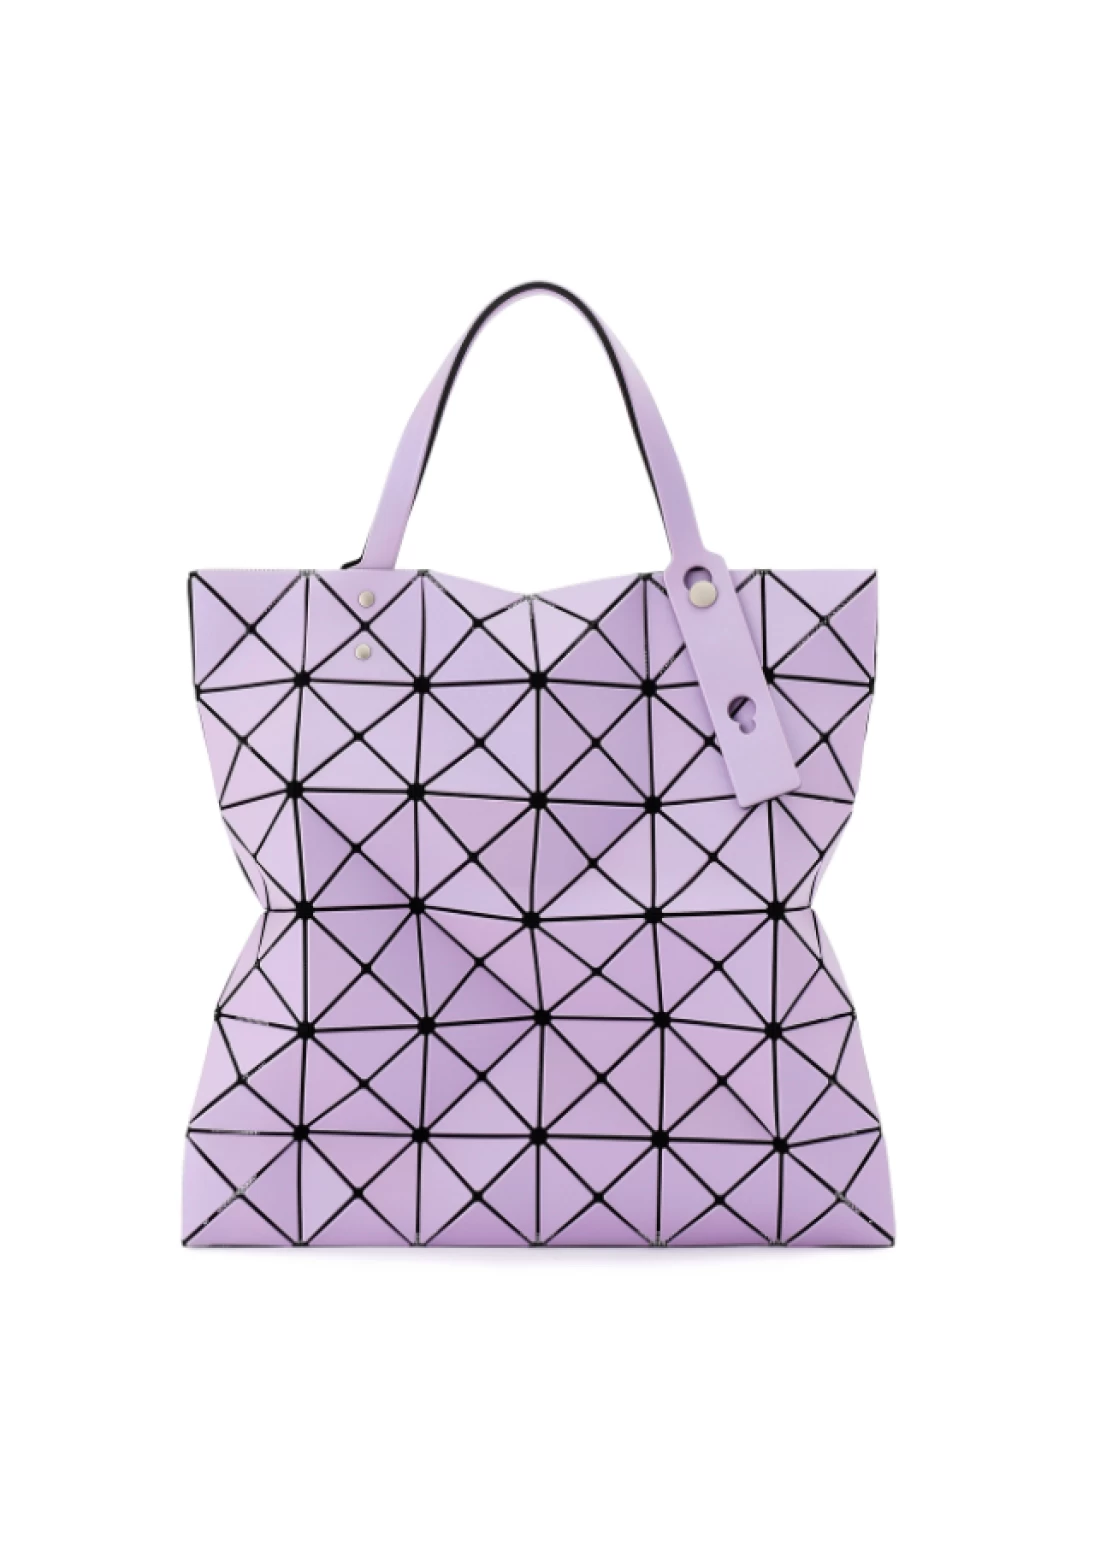 Bao Bao Bag Geometric Package Tote BaoBao Matte Shoulder Bag 